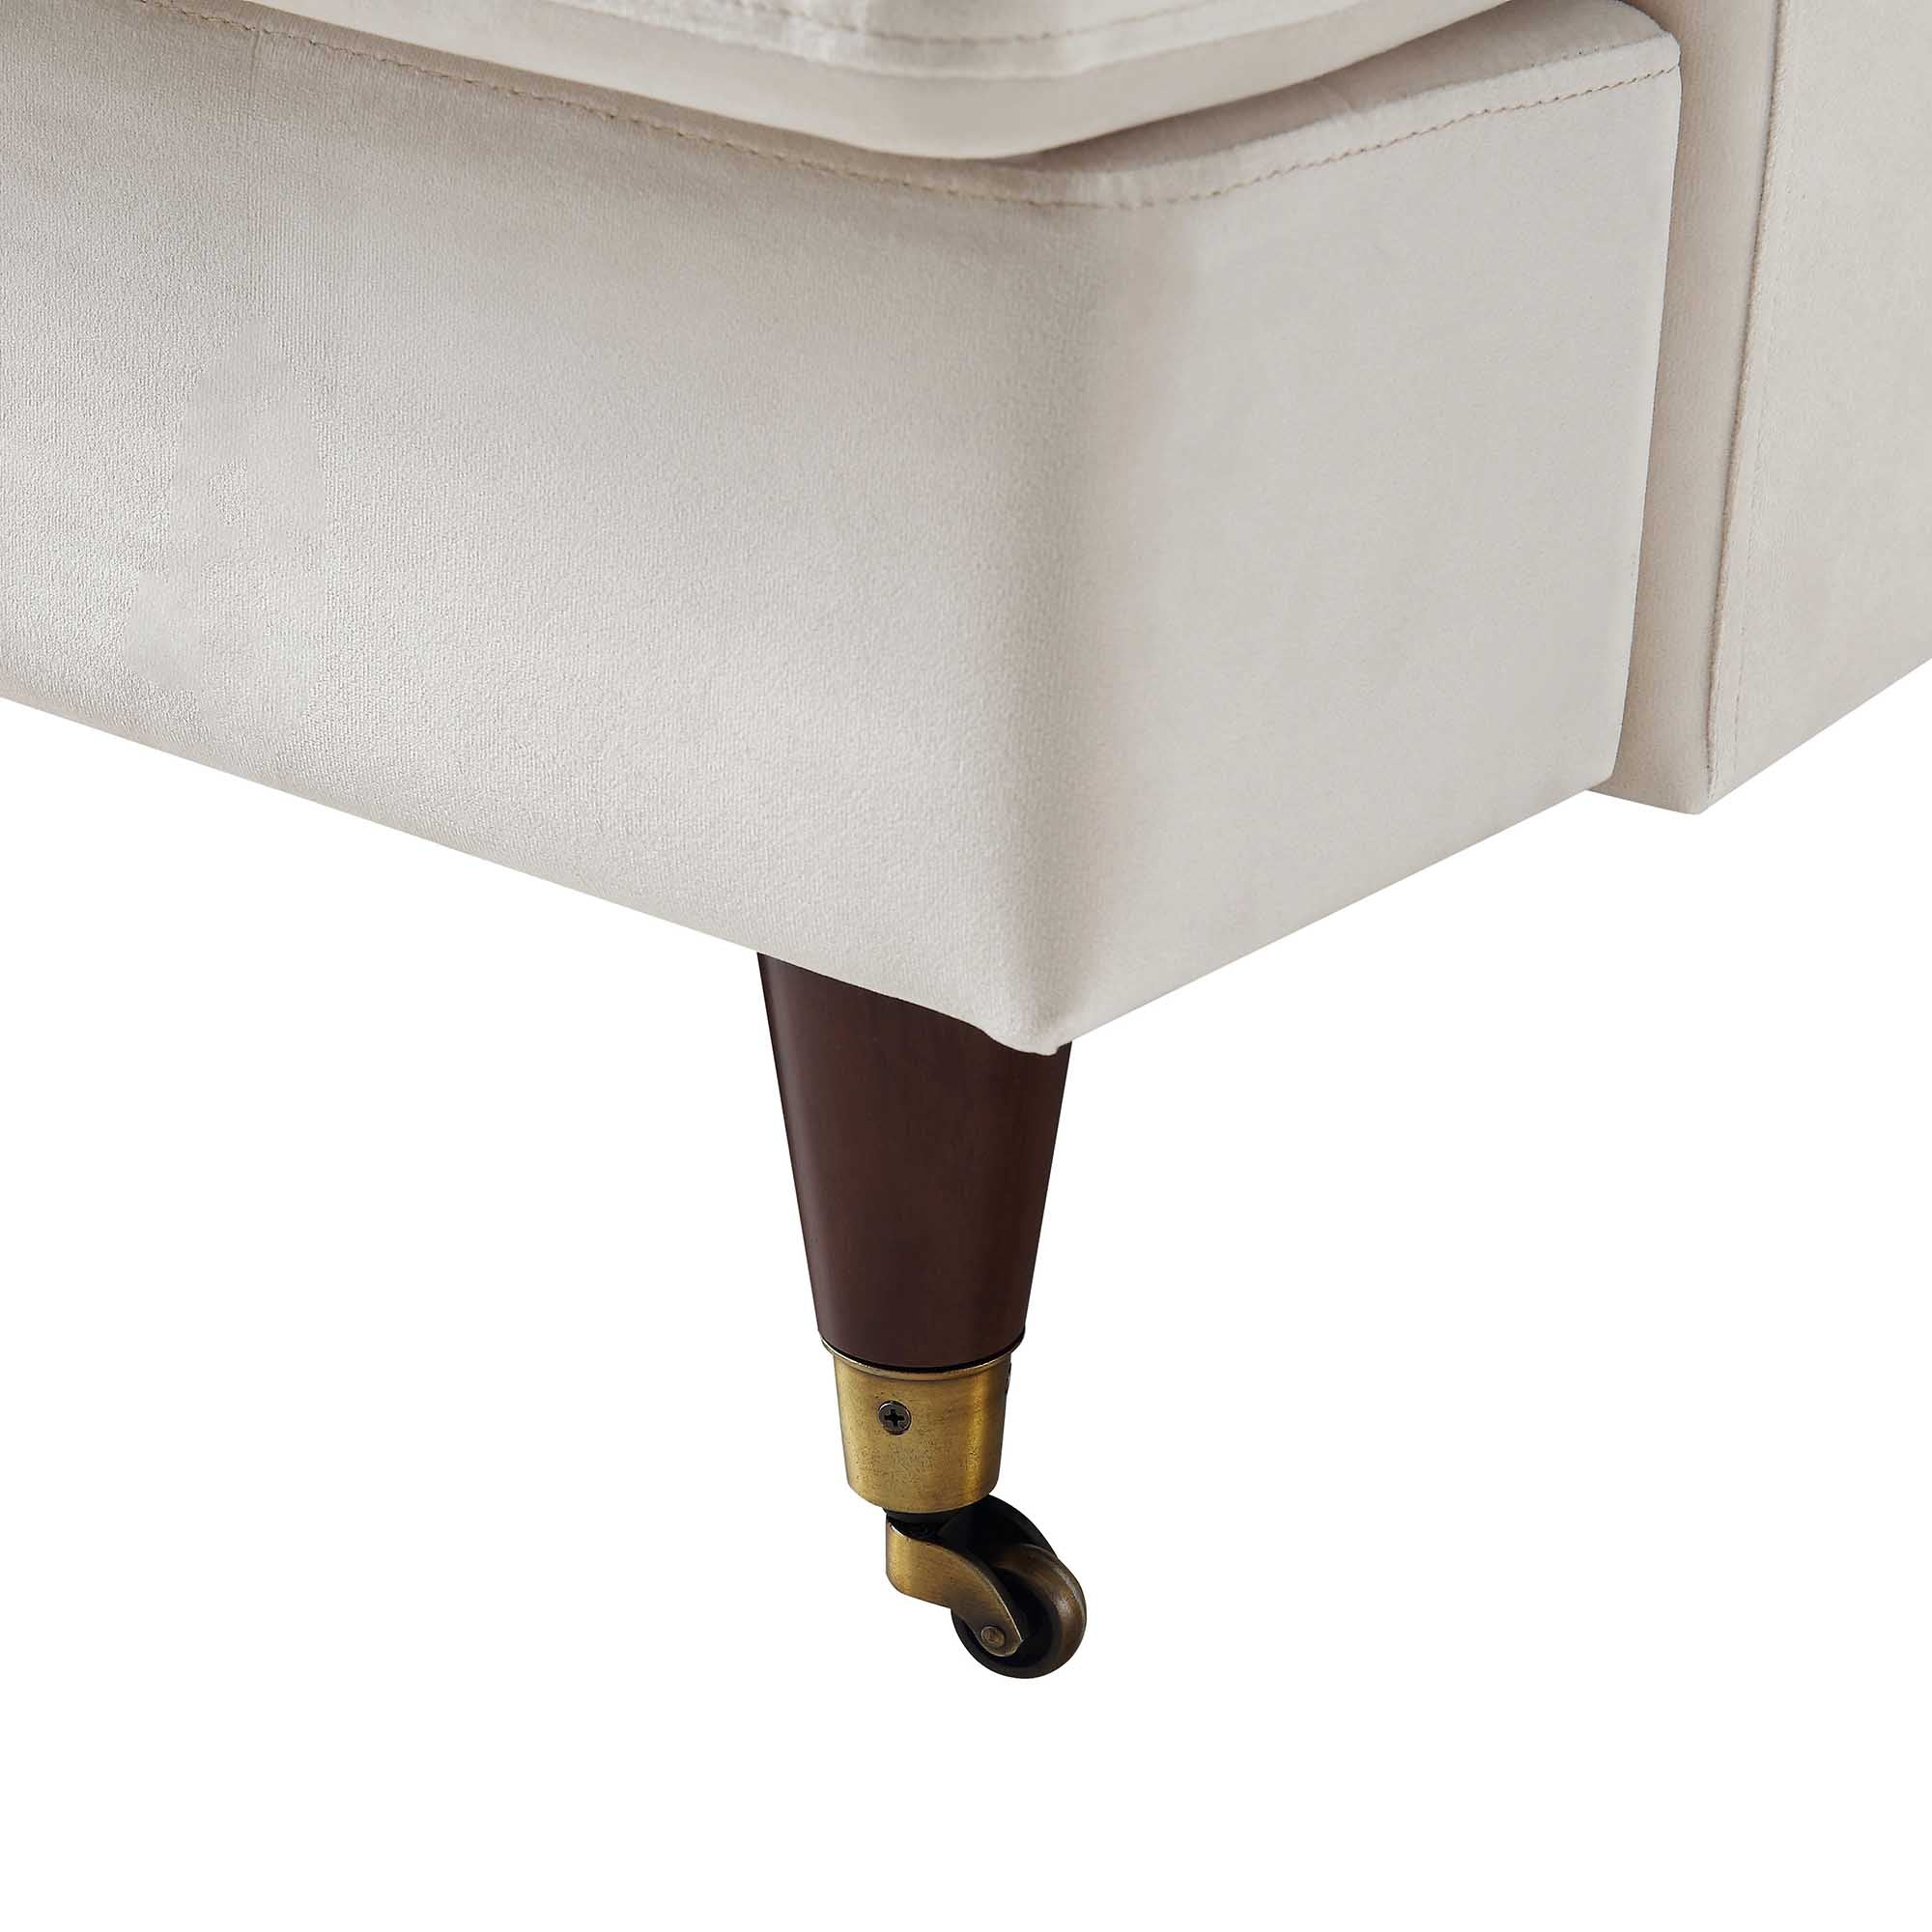 Brigette 2-Seater Beige Velvet Sofa with Antique Brass Castor Legs